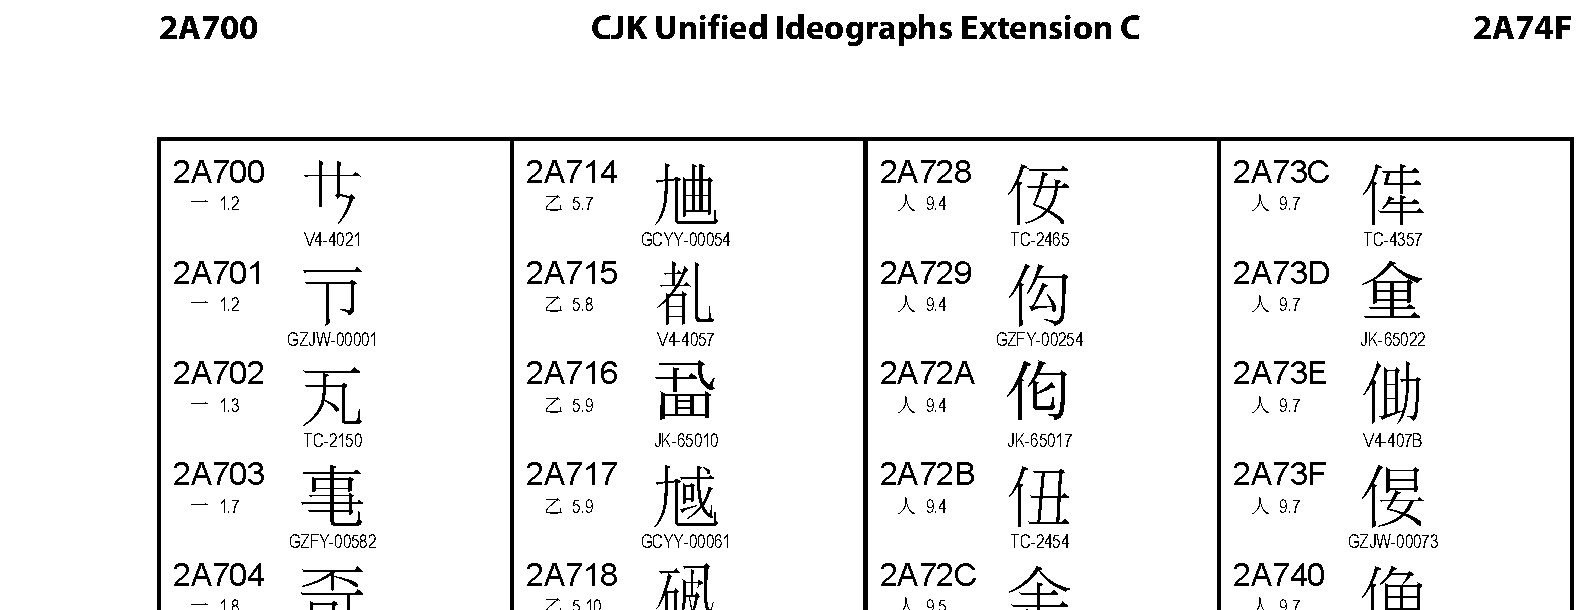 Unicode - CJK Unified Ideographs Extension C